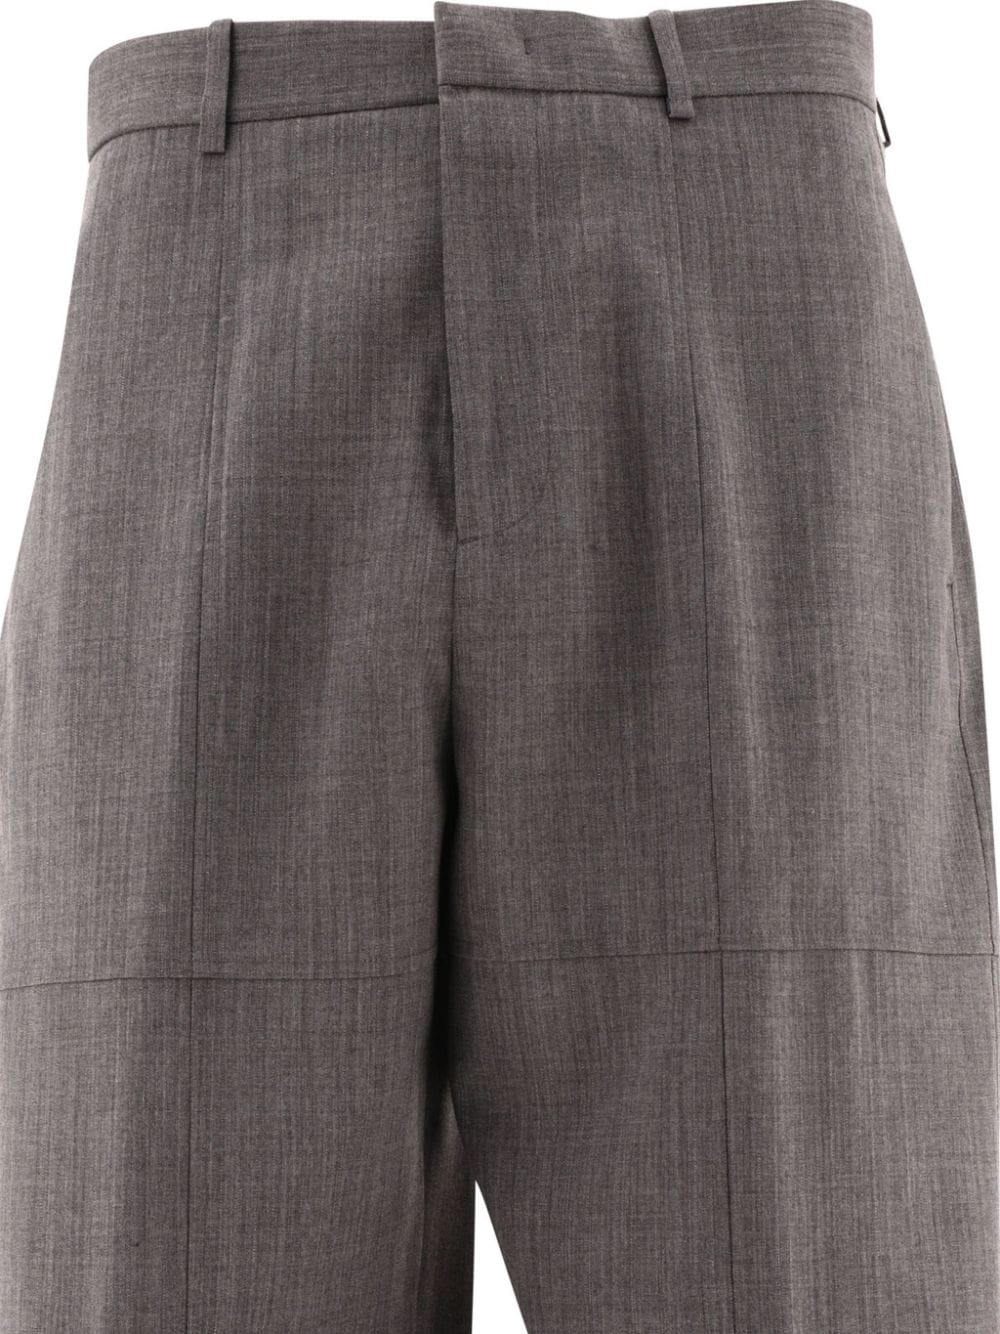 Pantalone sartoriale grigio